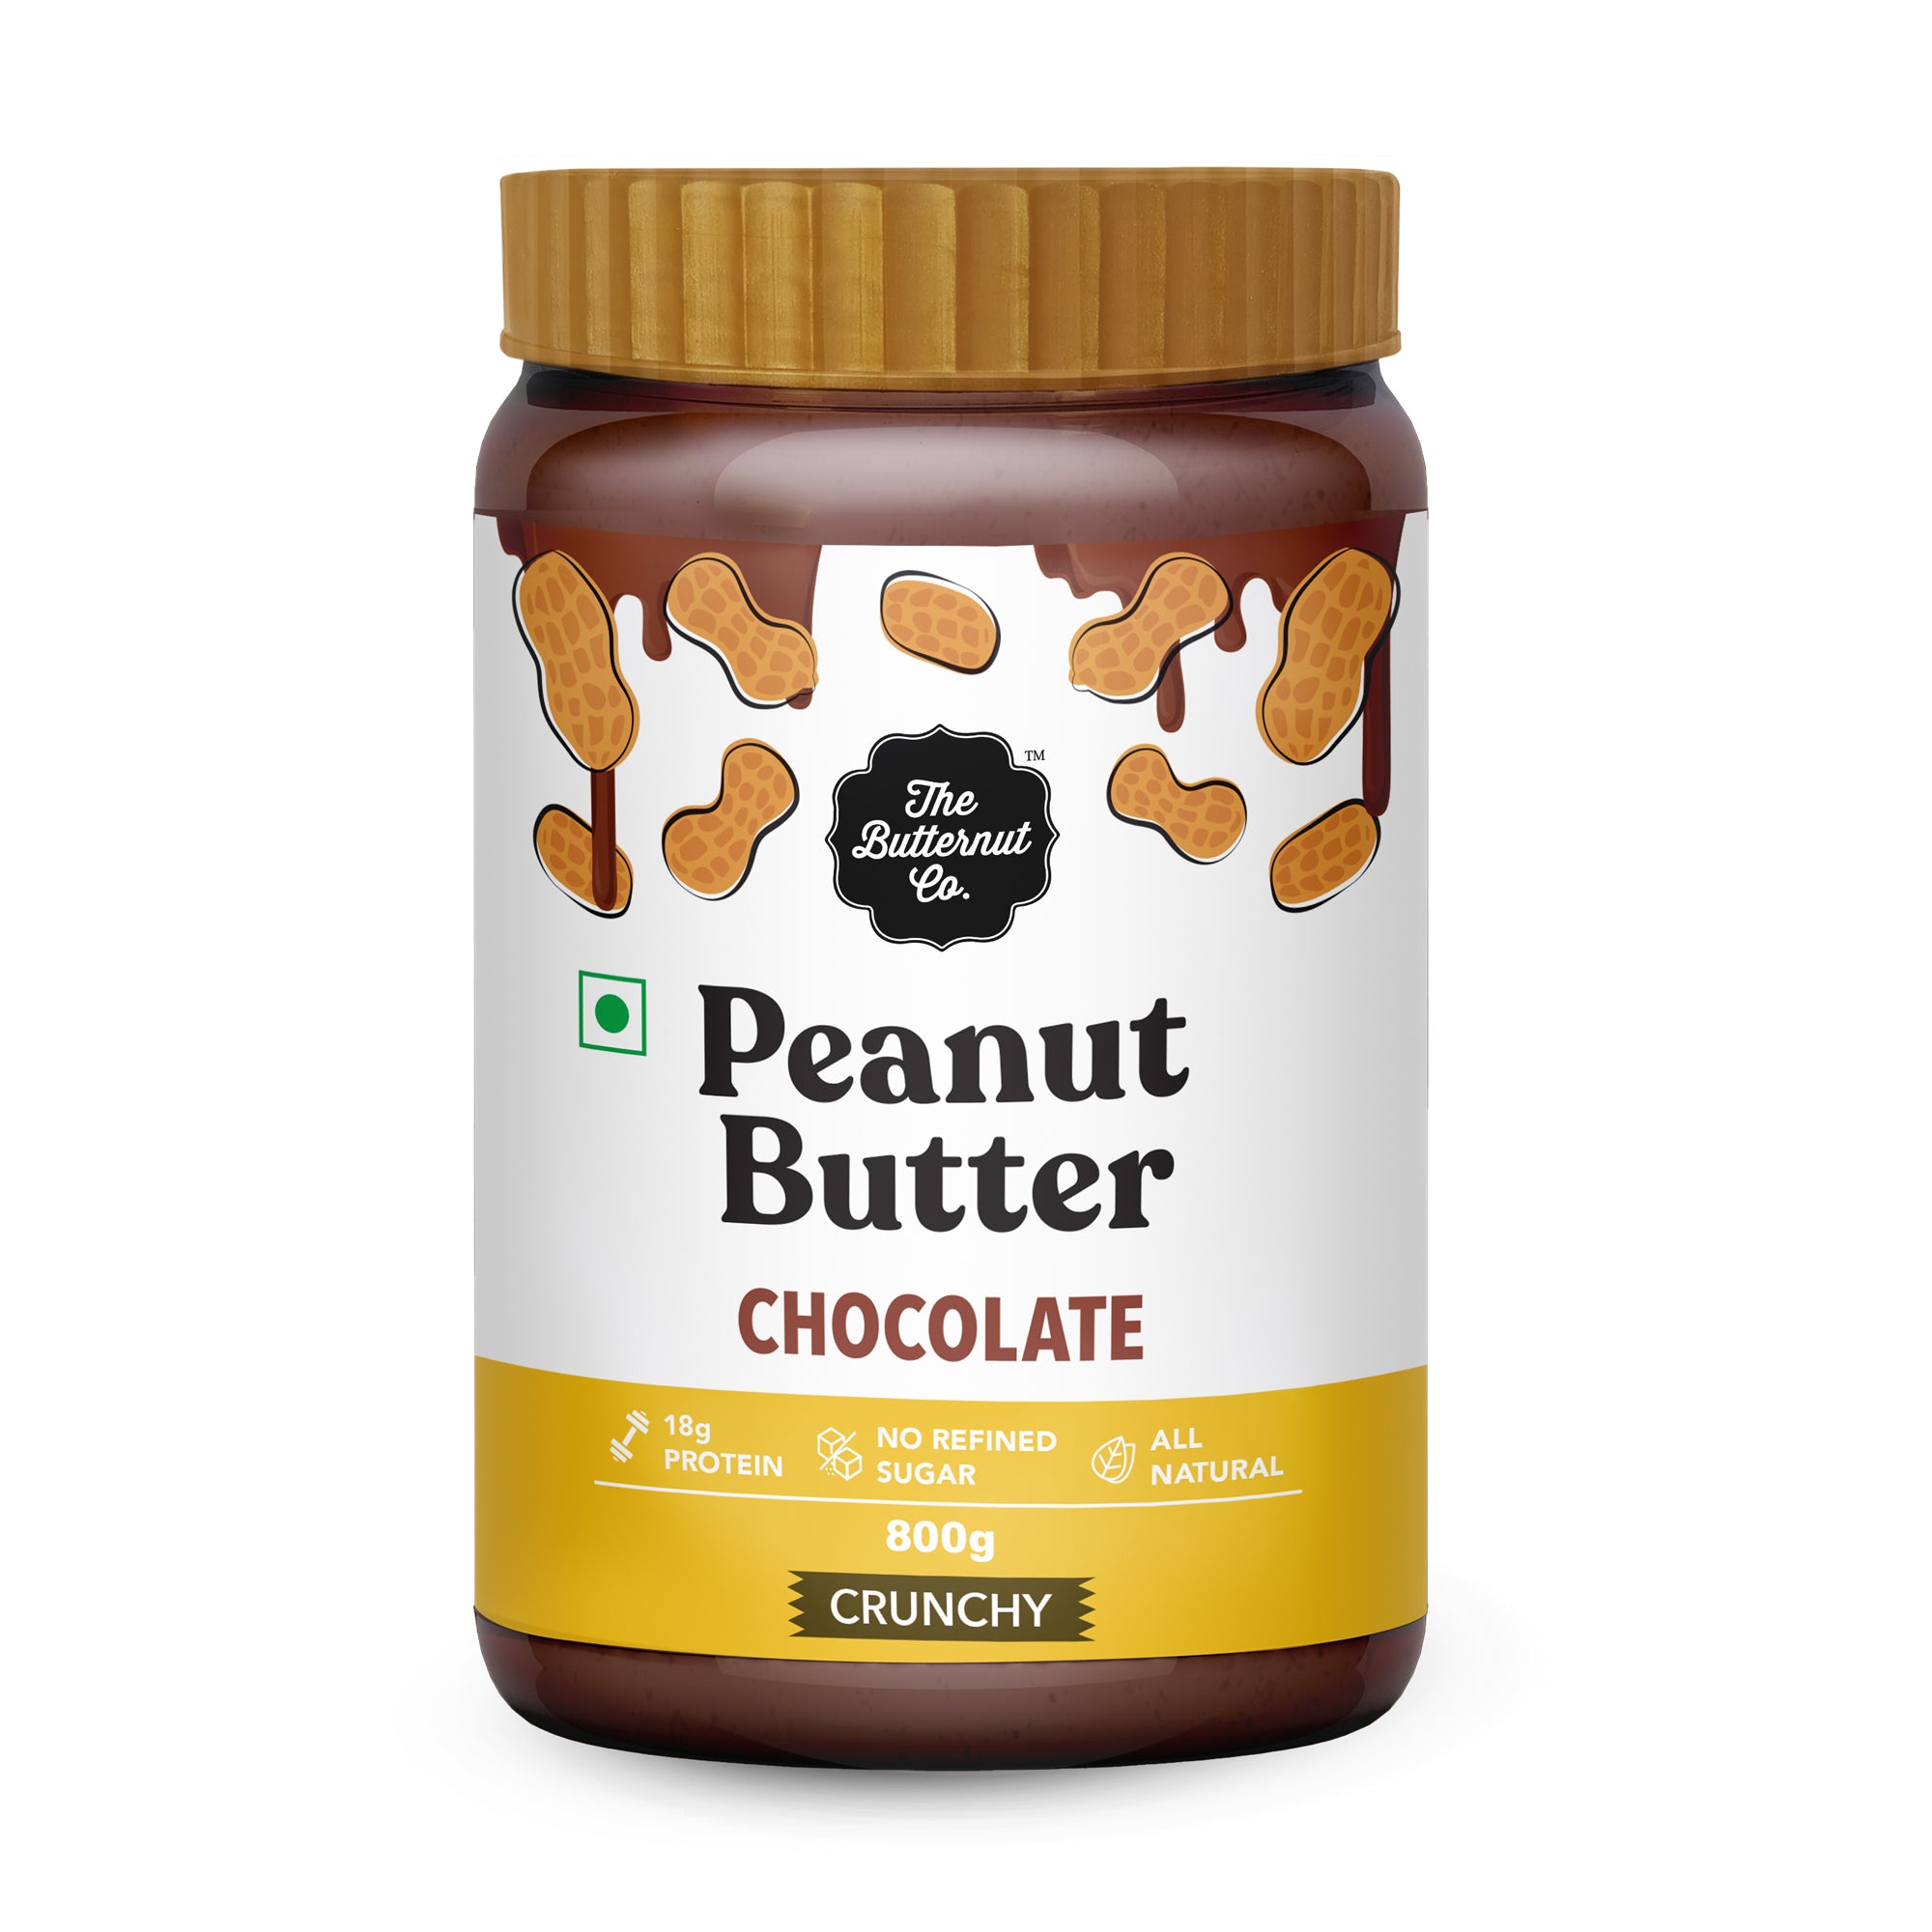 The Butternut Co. Chocolate Peanut Butter